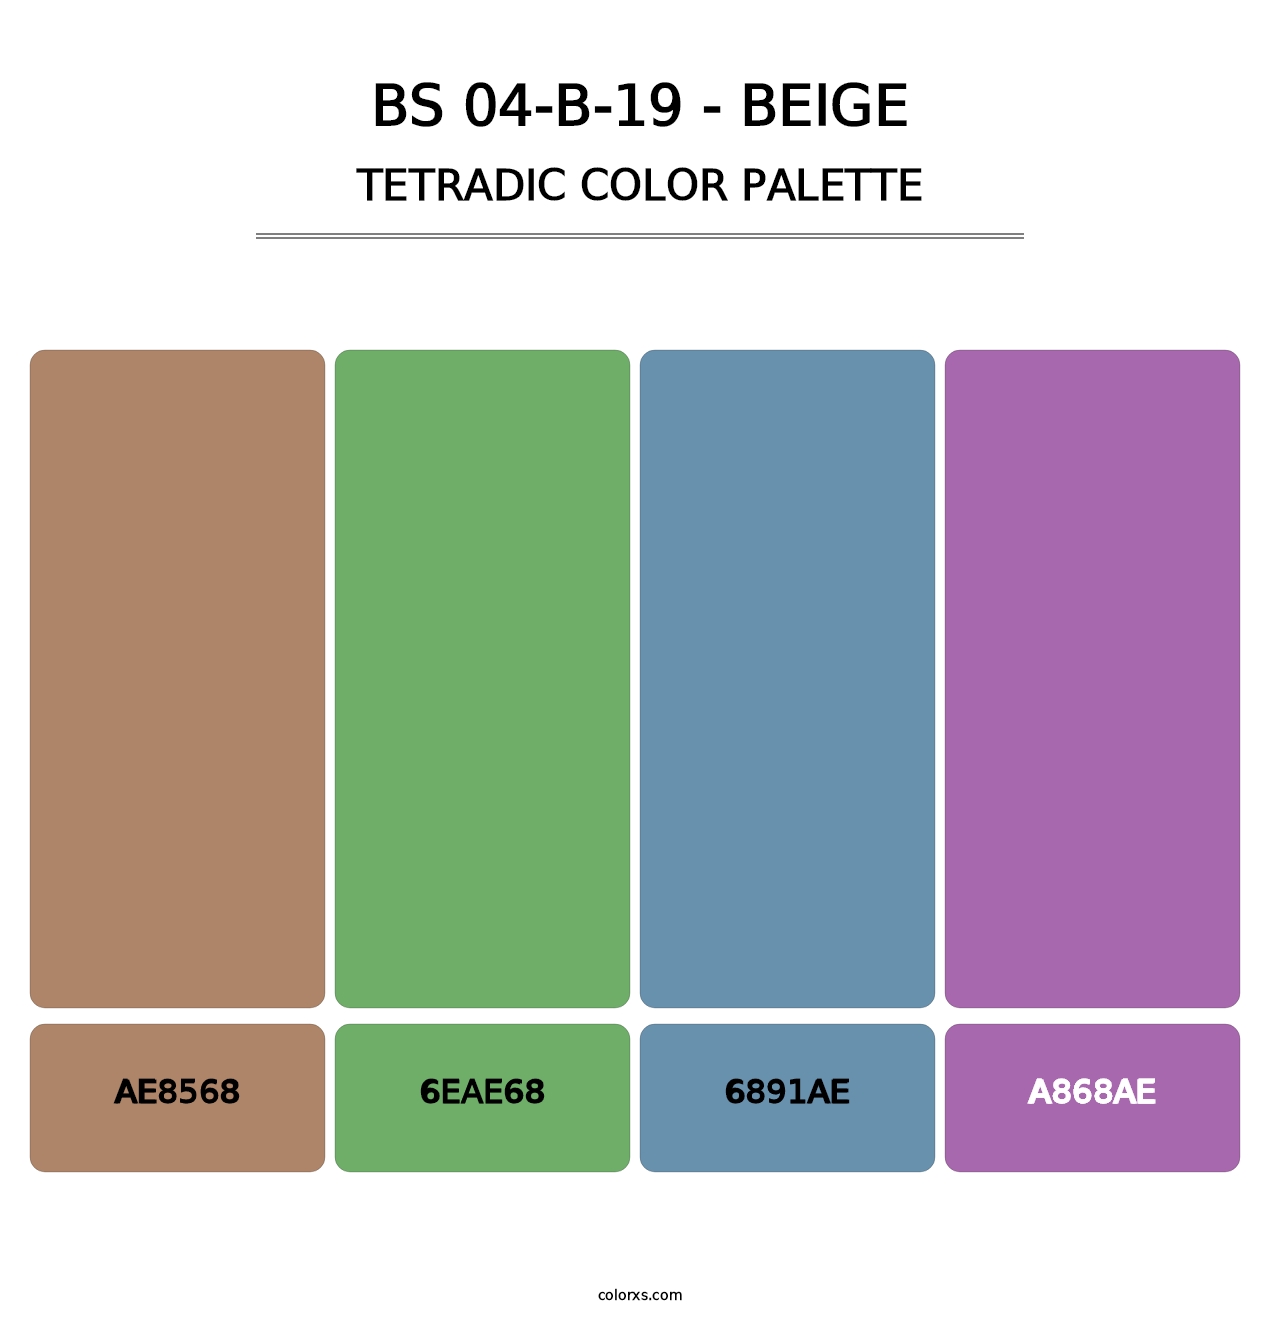 BS 04-B-19 - Beige - Tetradic Color Palette